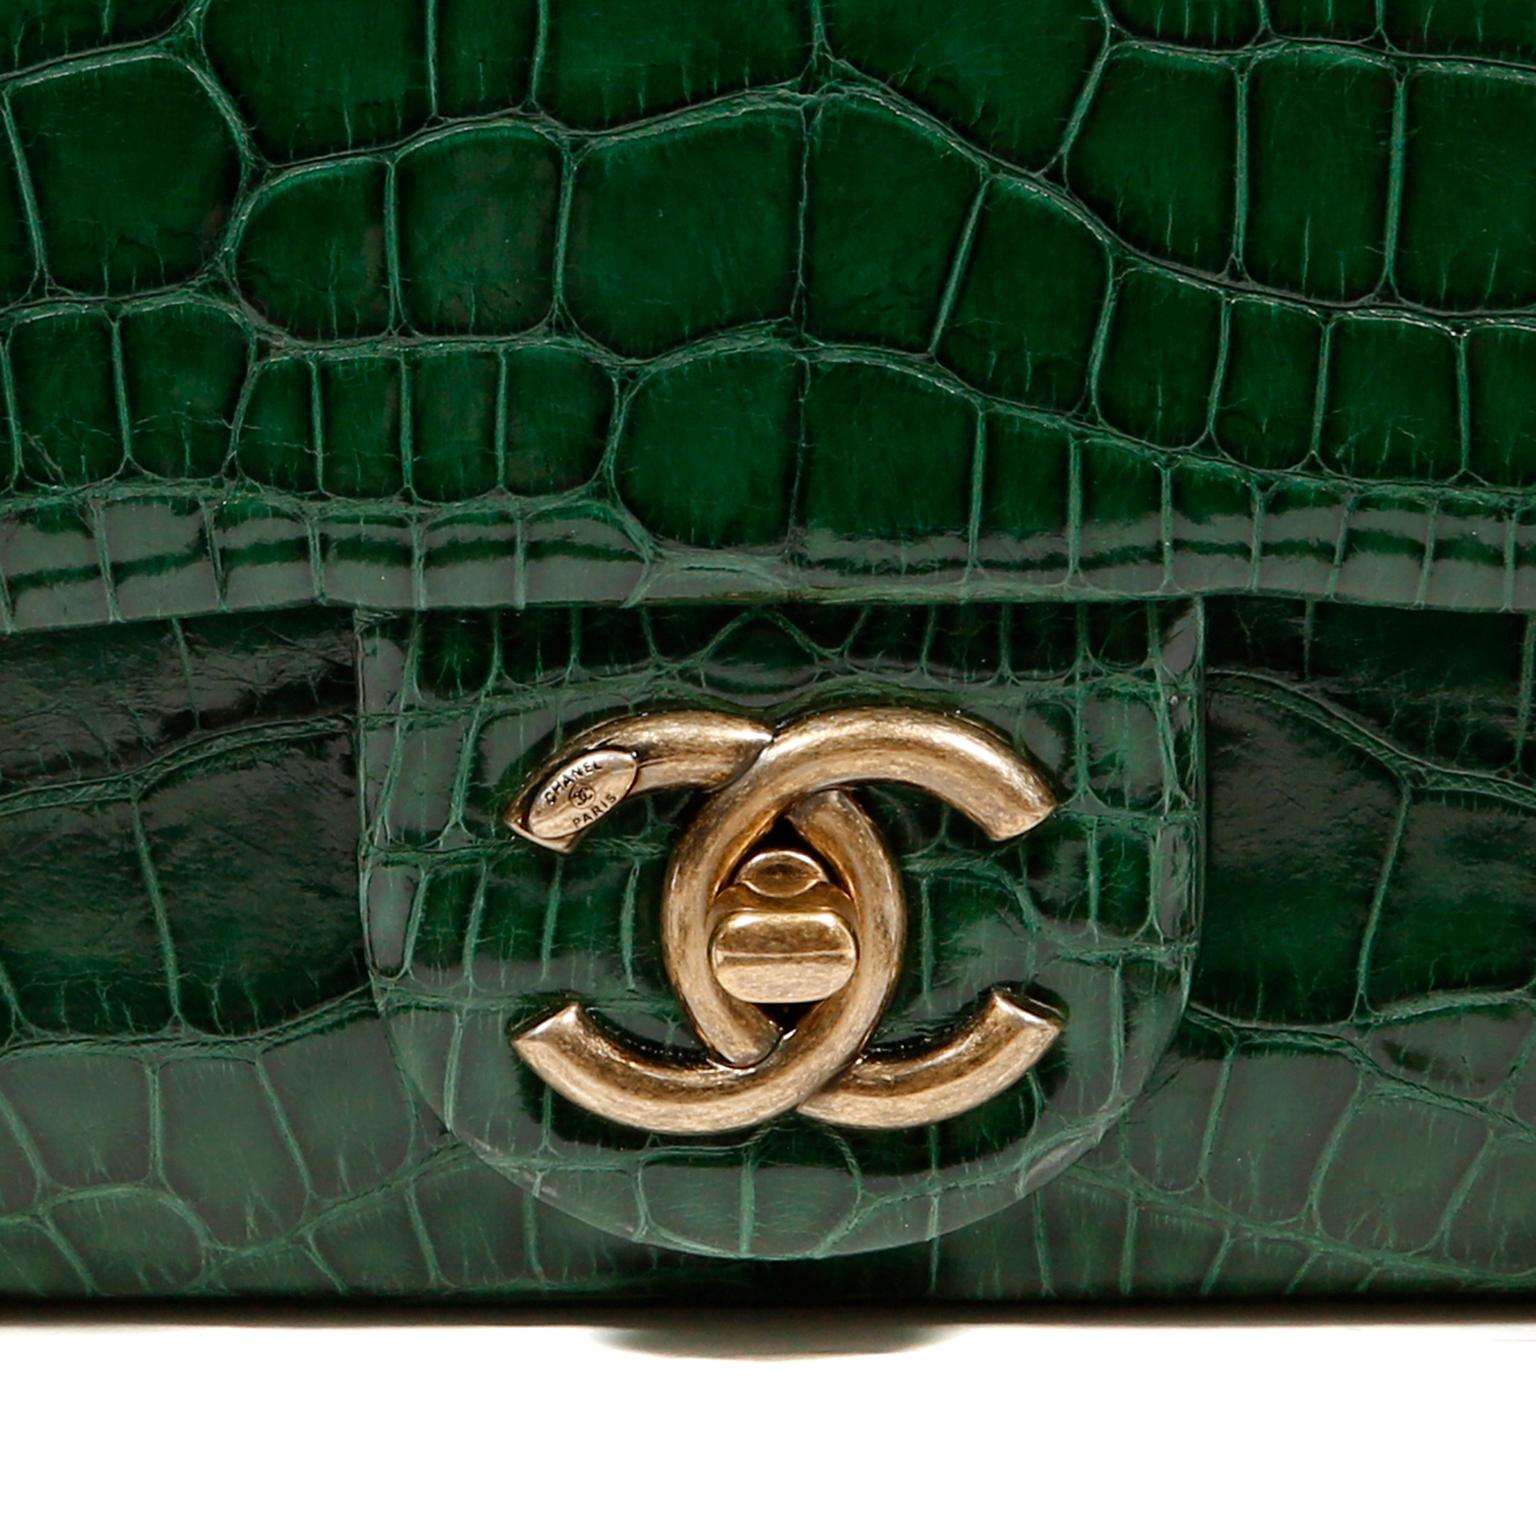 emerald green chanel bag